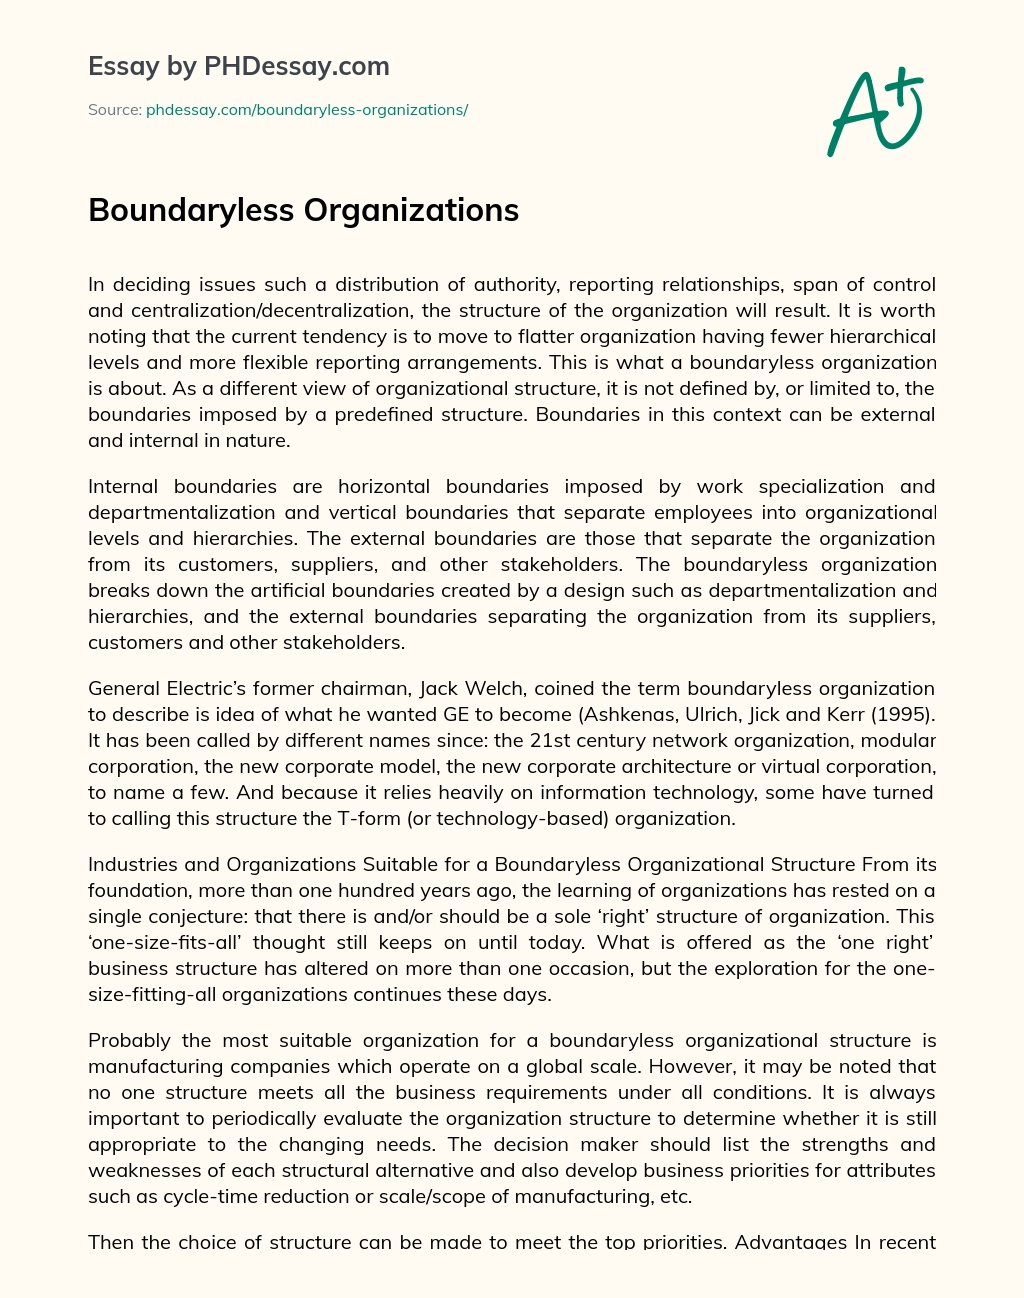 Boundaryless Organizations essay